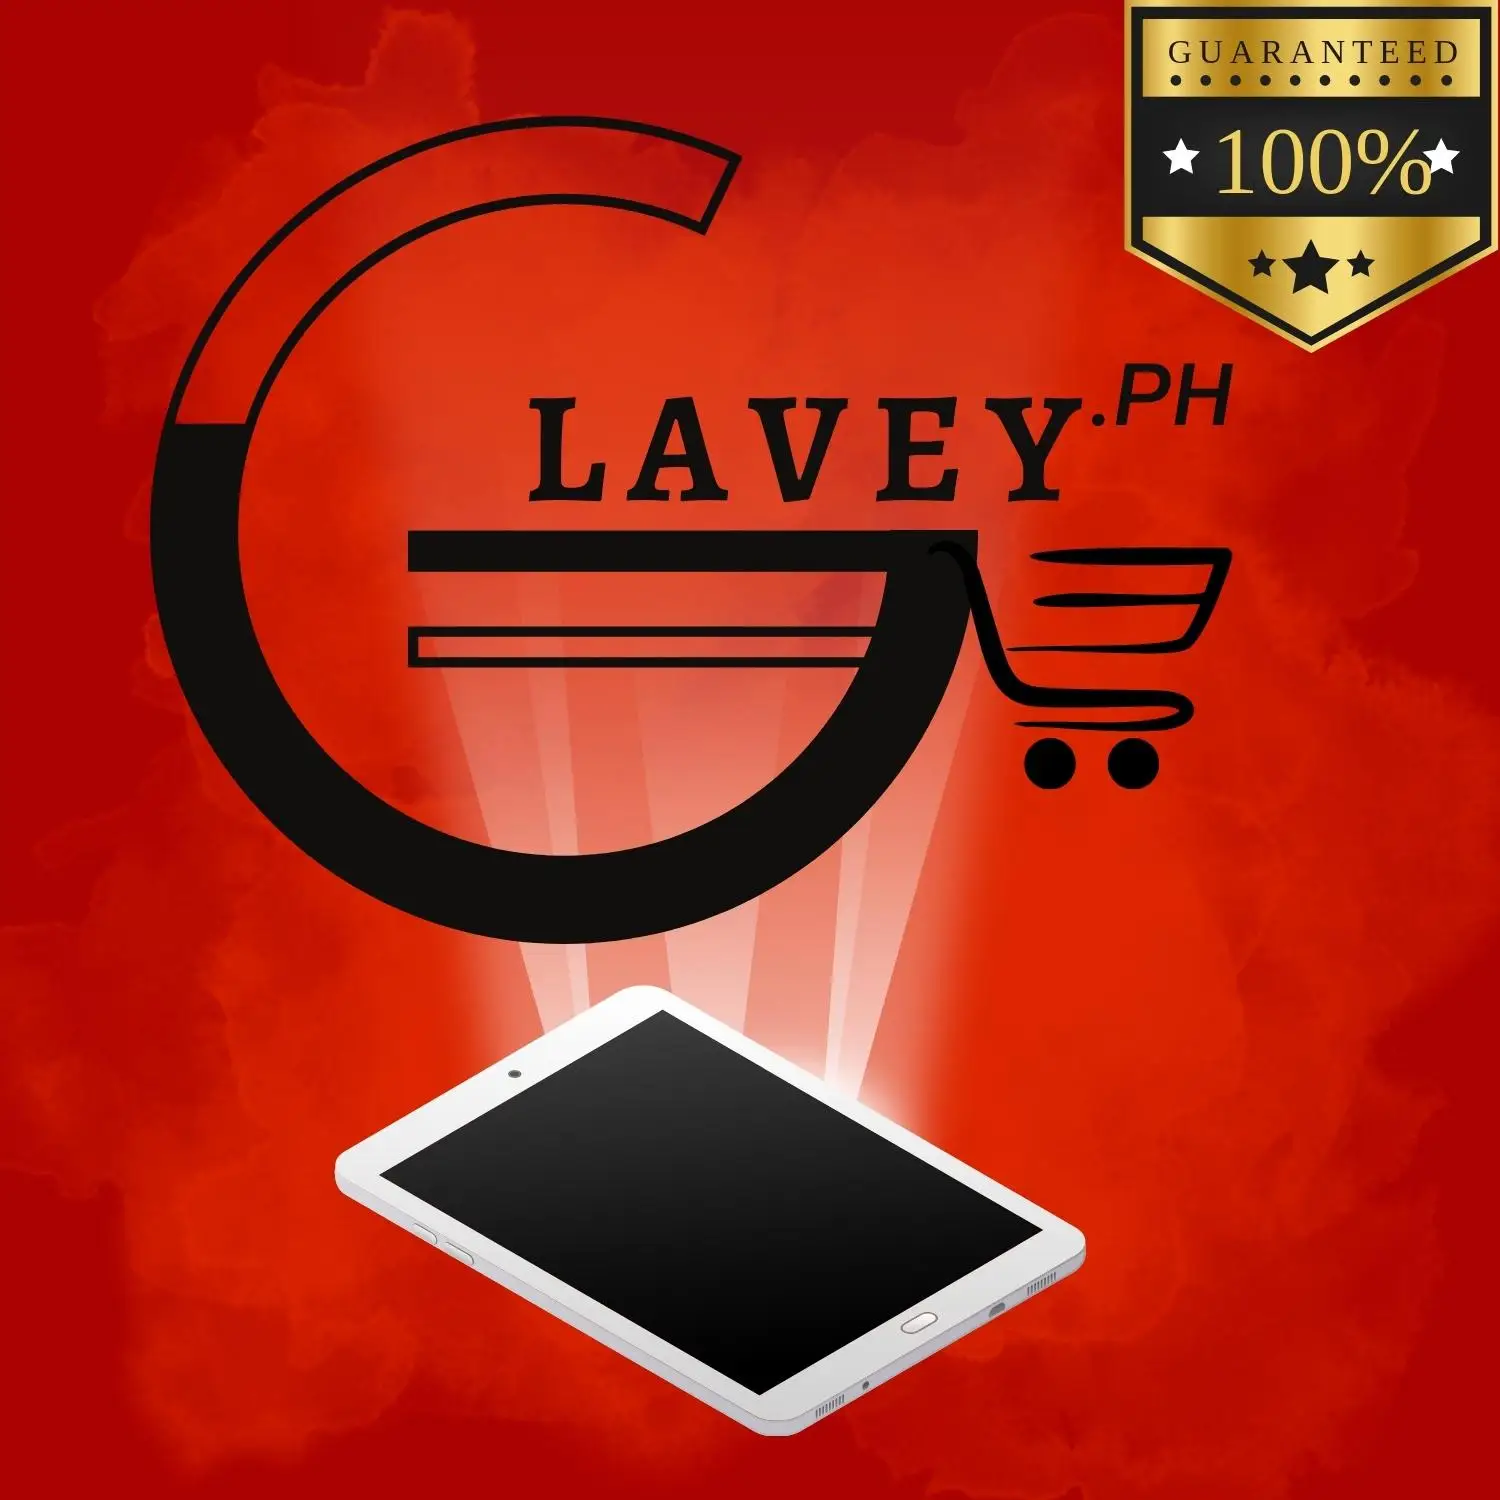 Galavey Electronics Co, Ltd